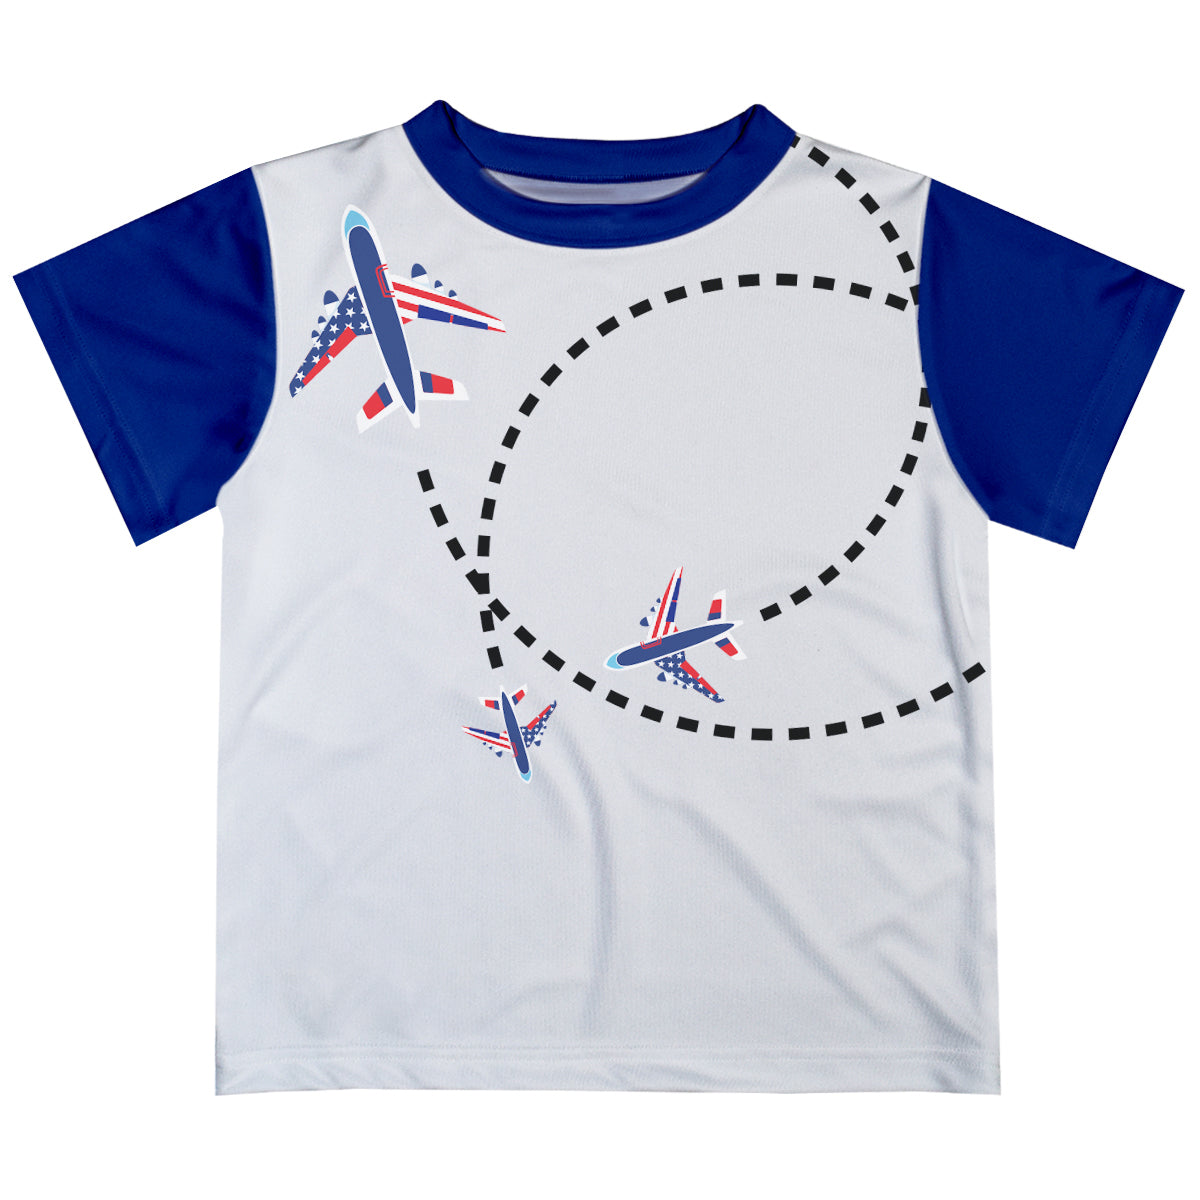 Planes White Royal Short Sleeve Boys Tee Shirt - Wimziy&Co.